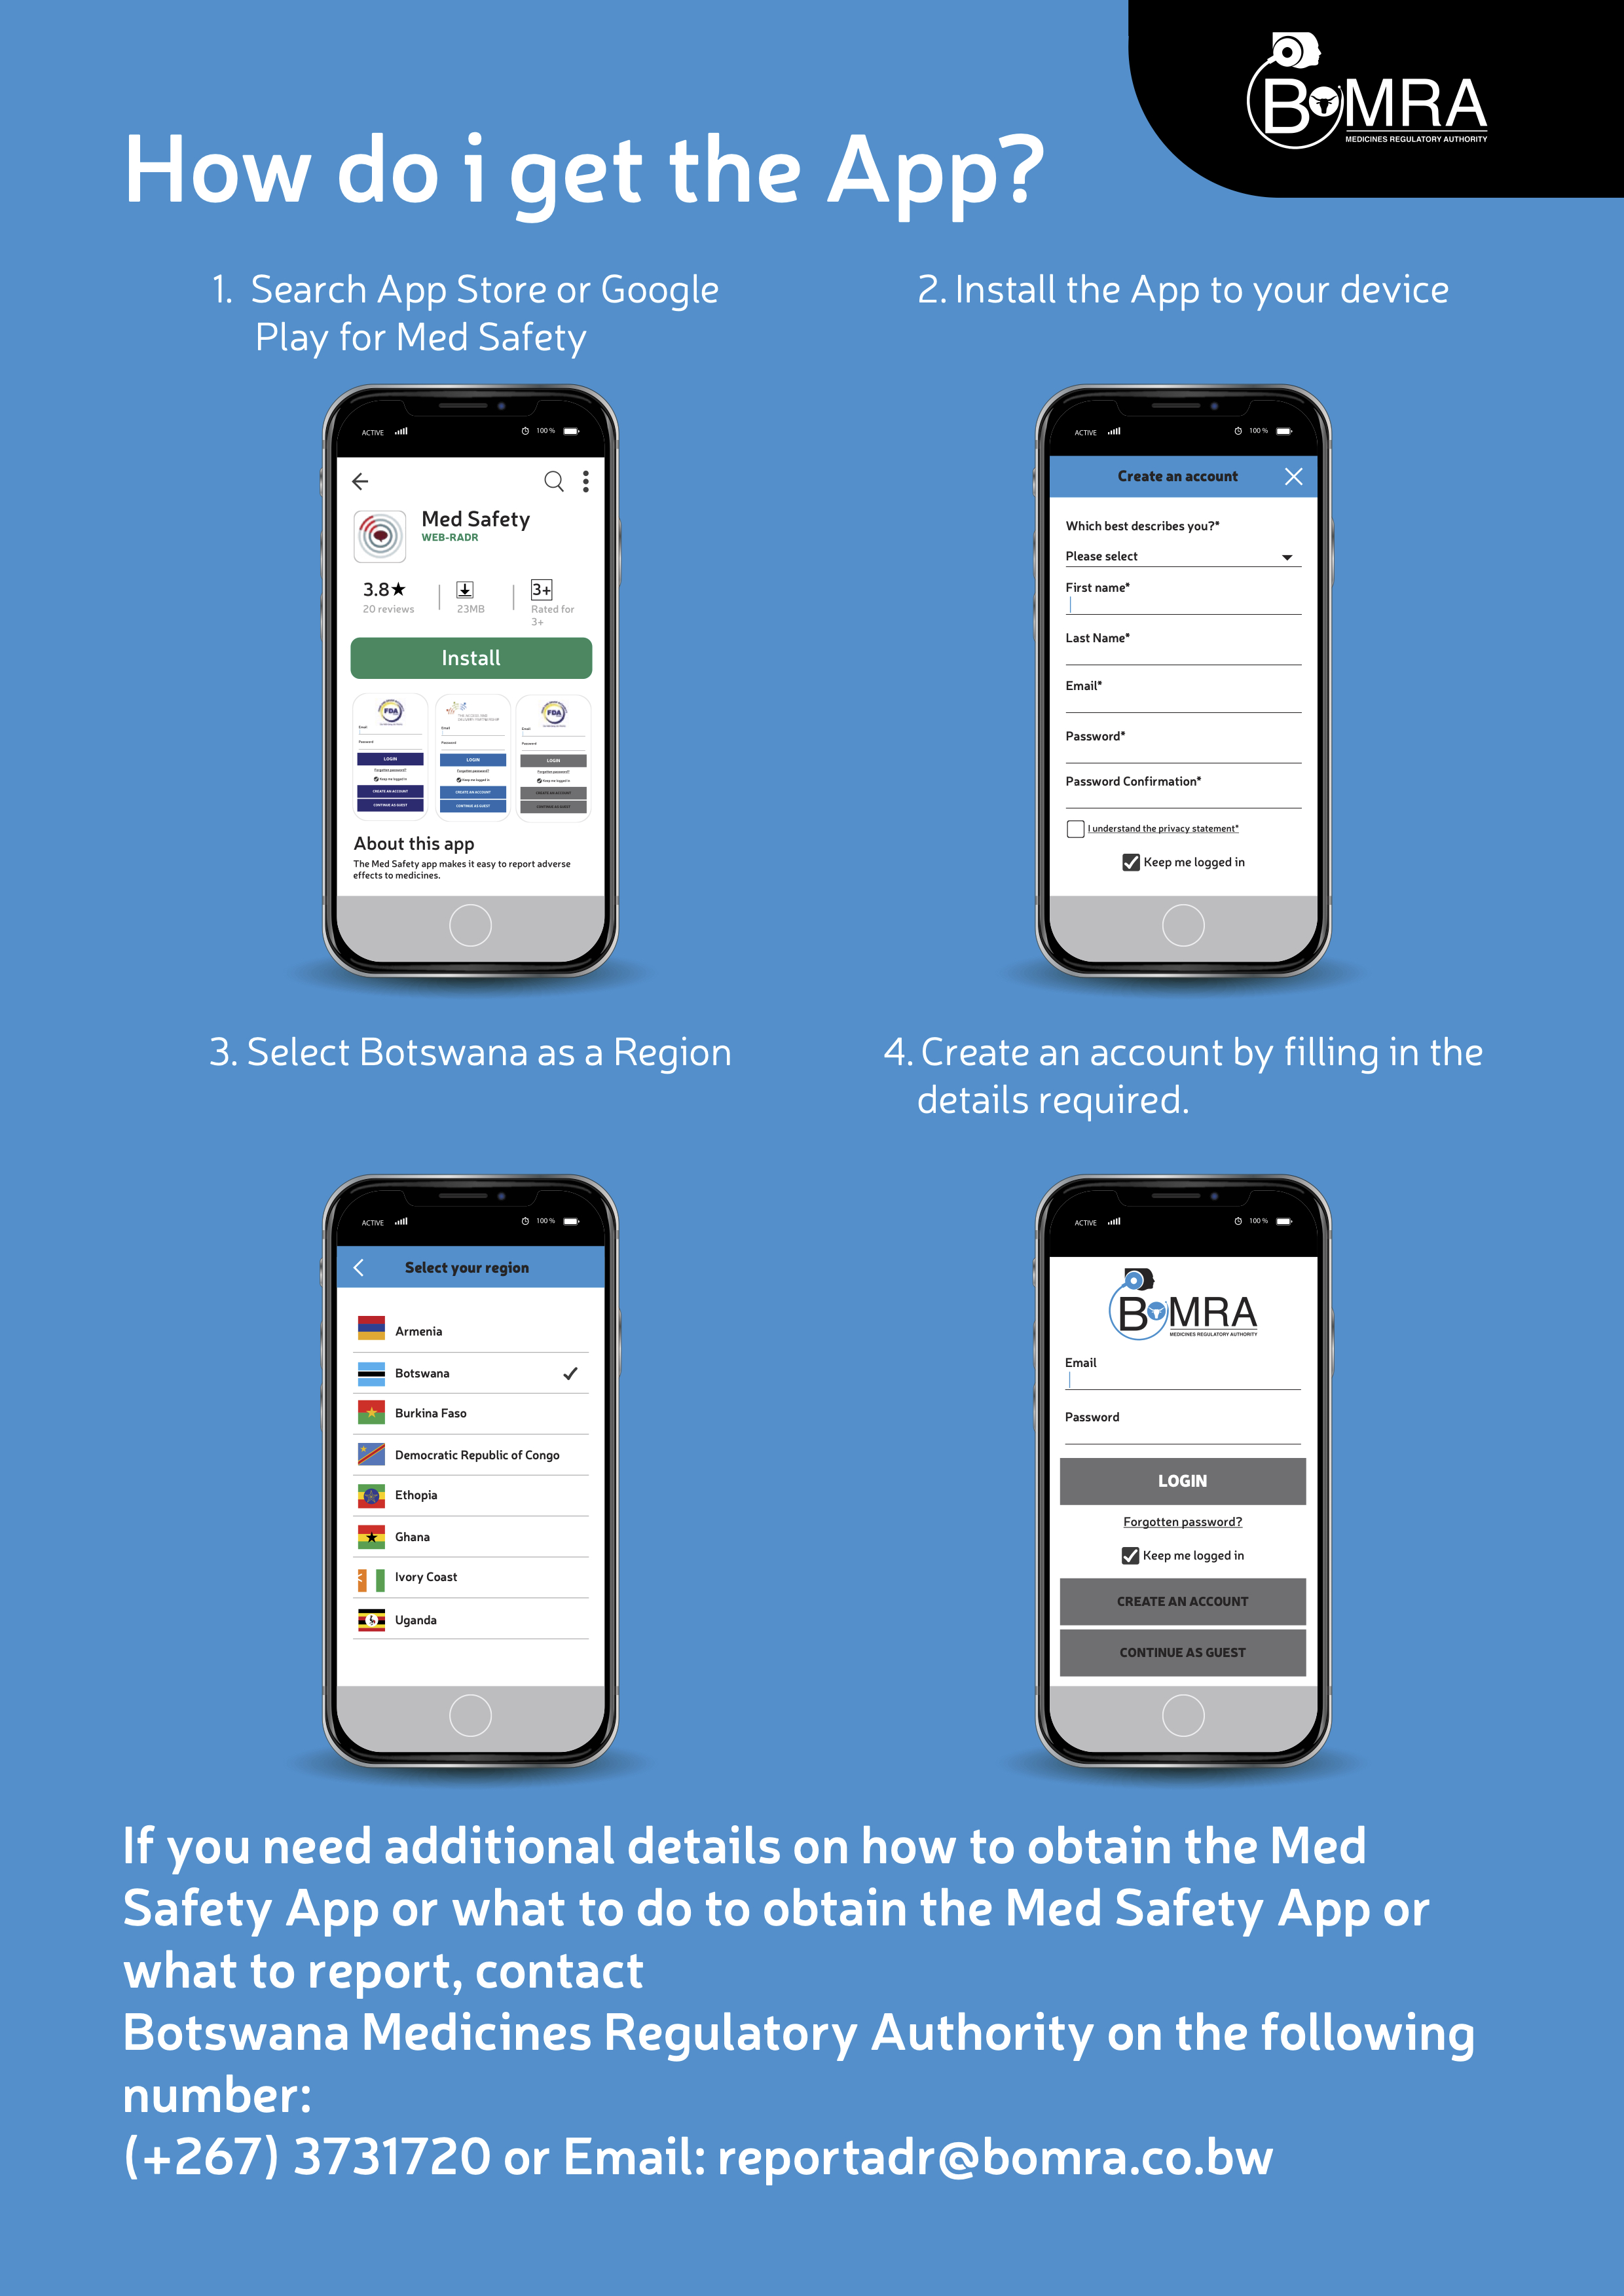 The Med Safety App in Botswana